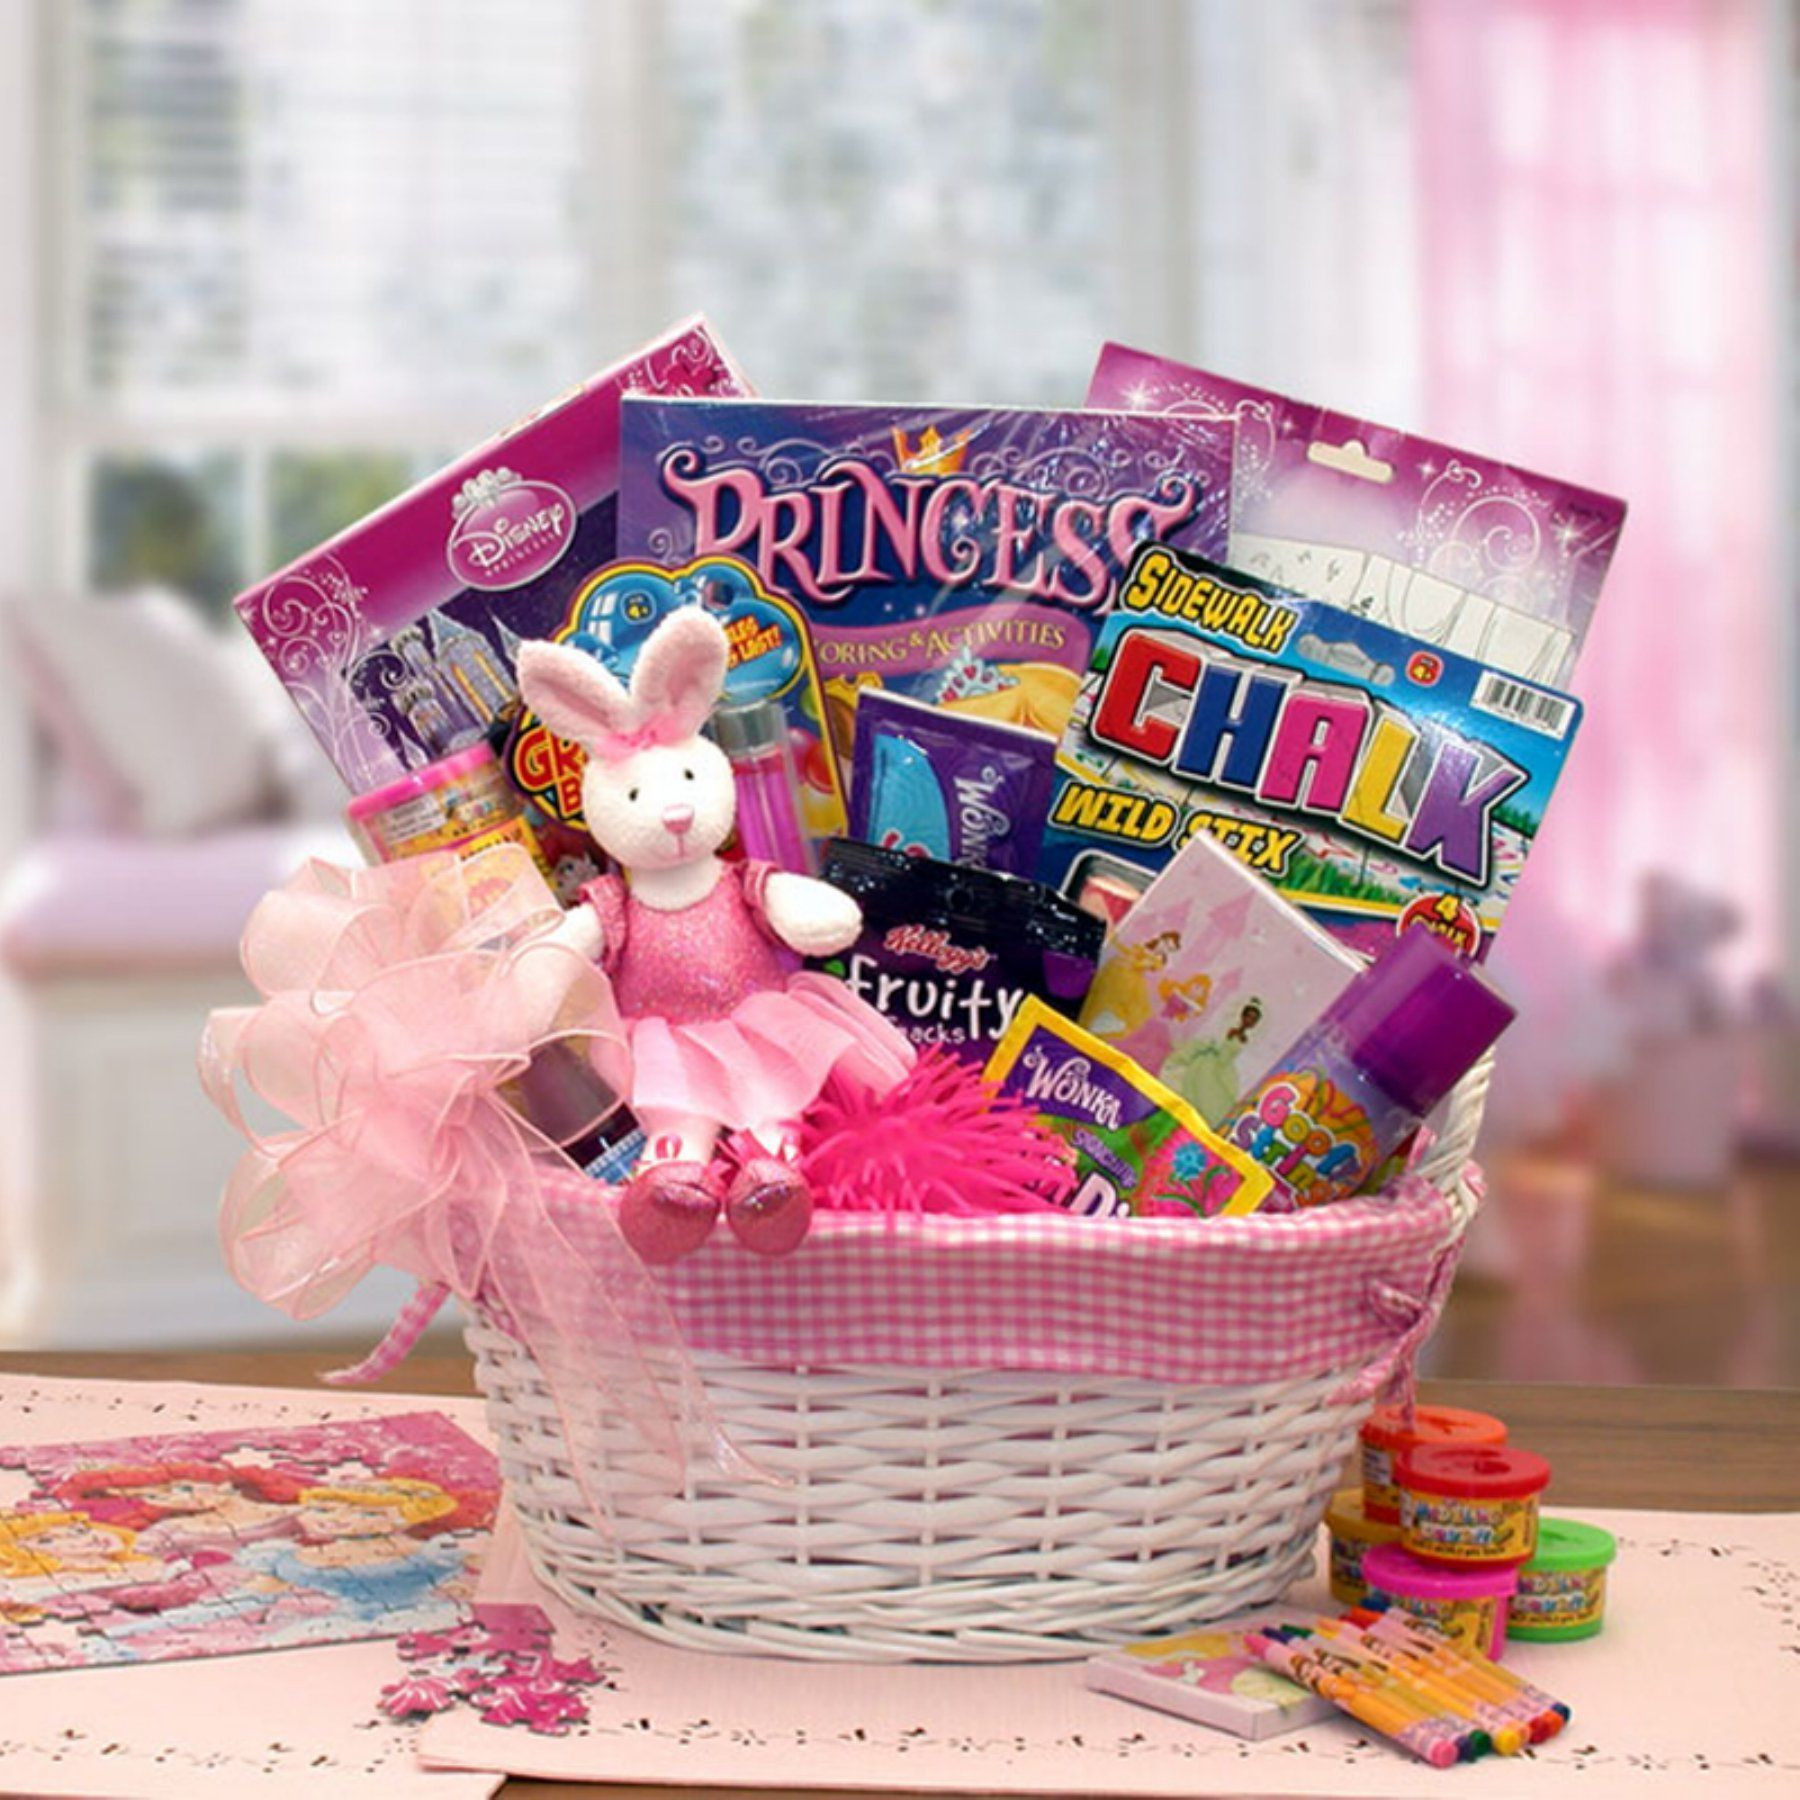 Big Gift Ideas For Kids
 A Little Disney Princess Gift Basket